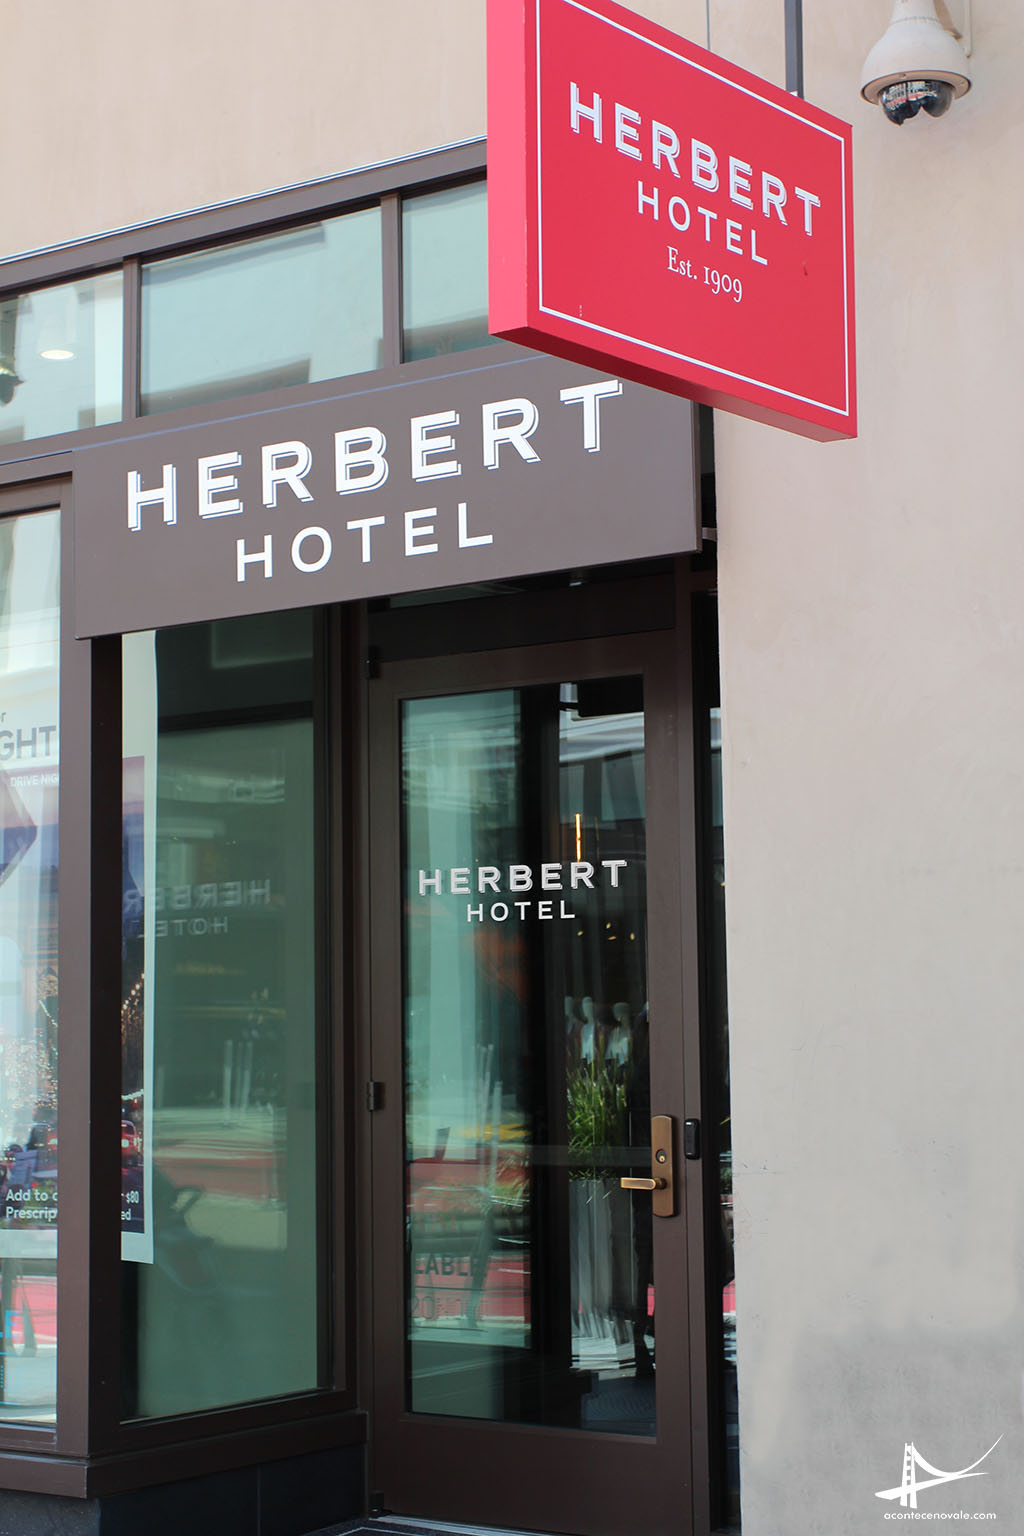 Herbert Hotel - San Francisco